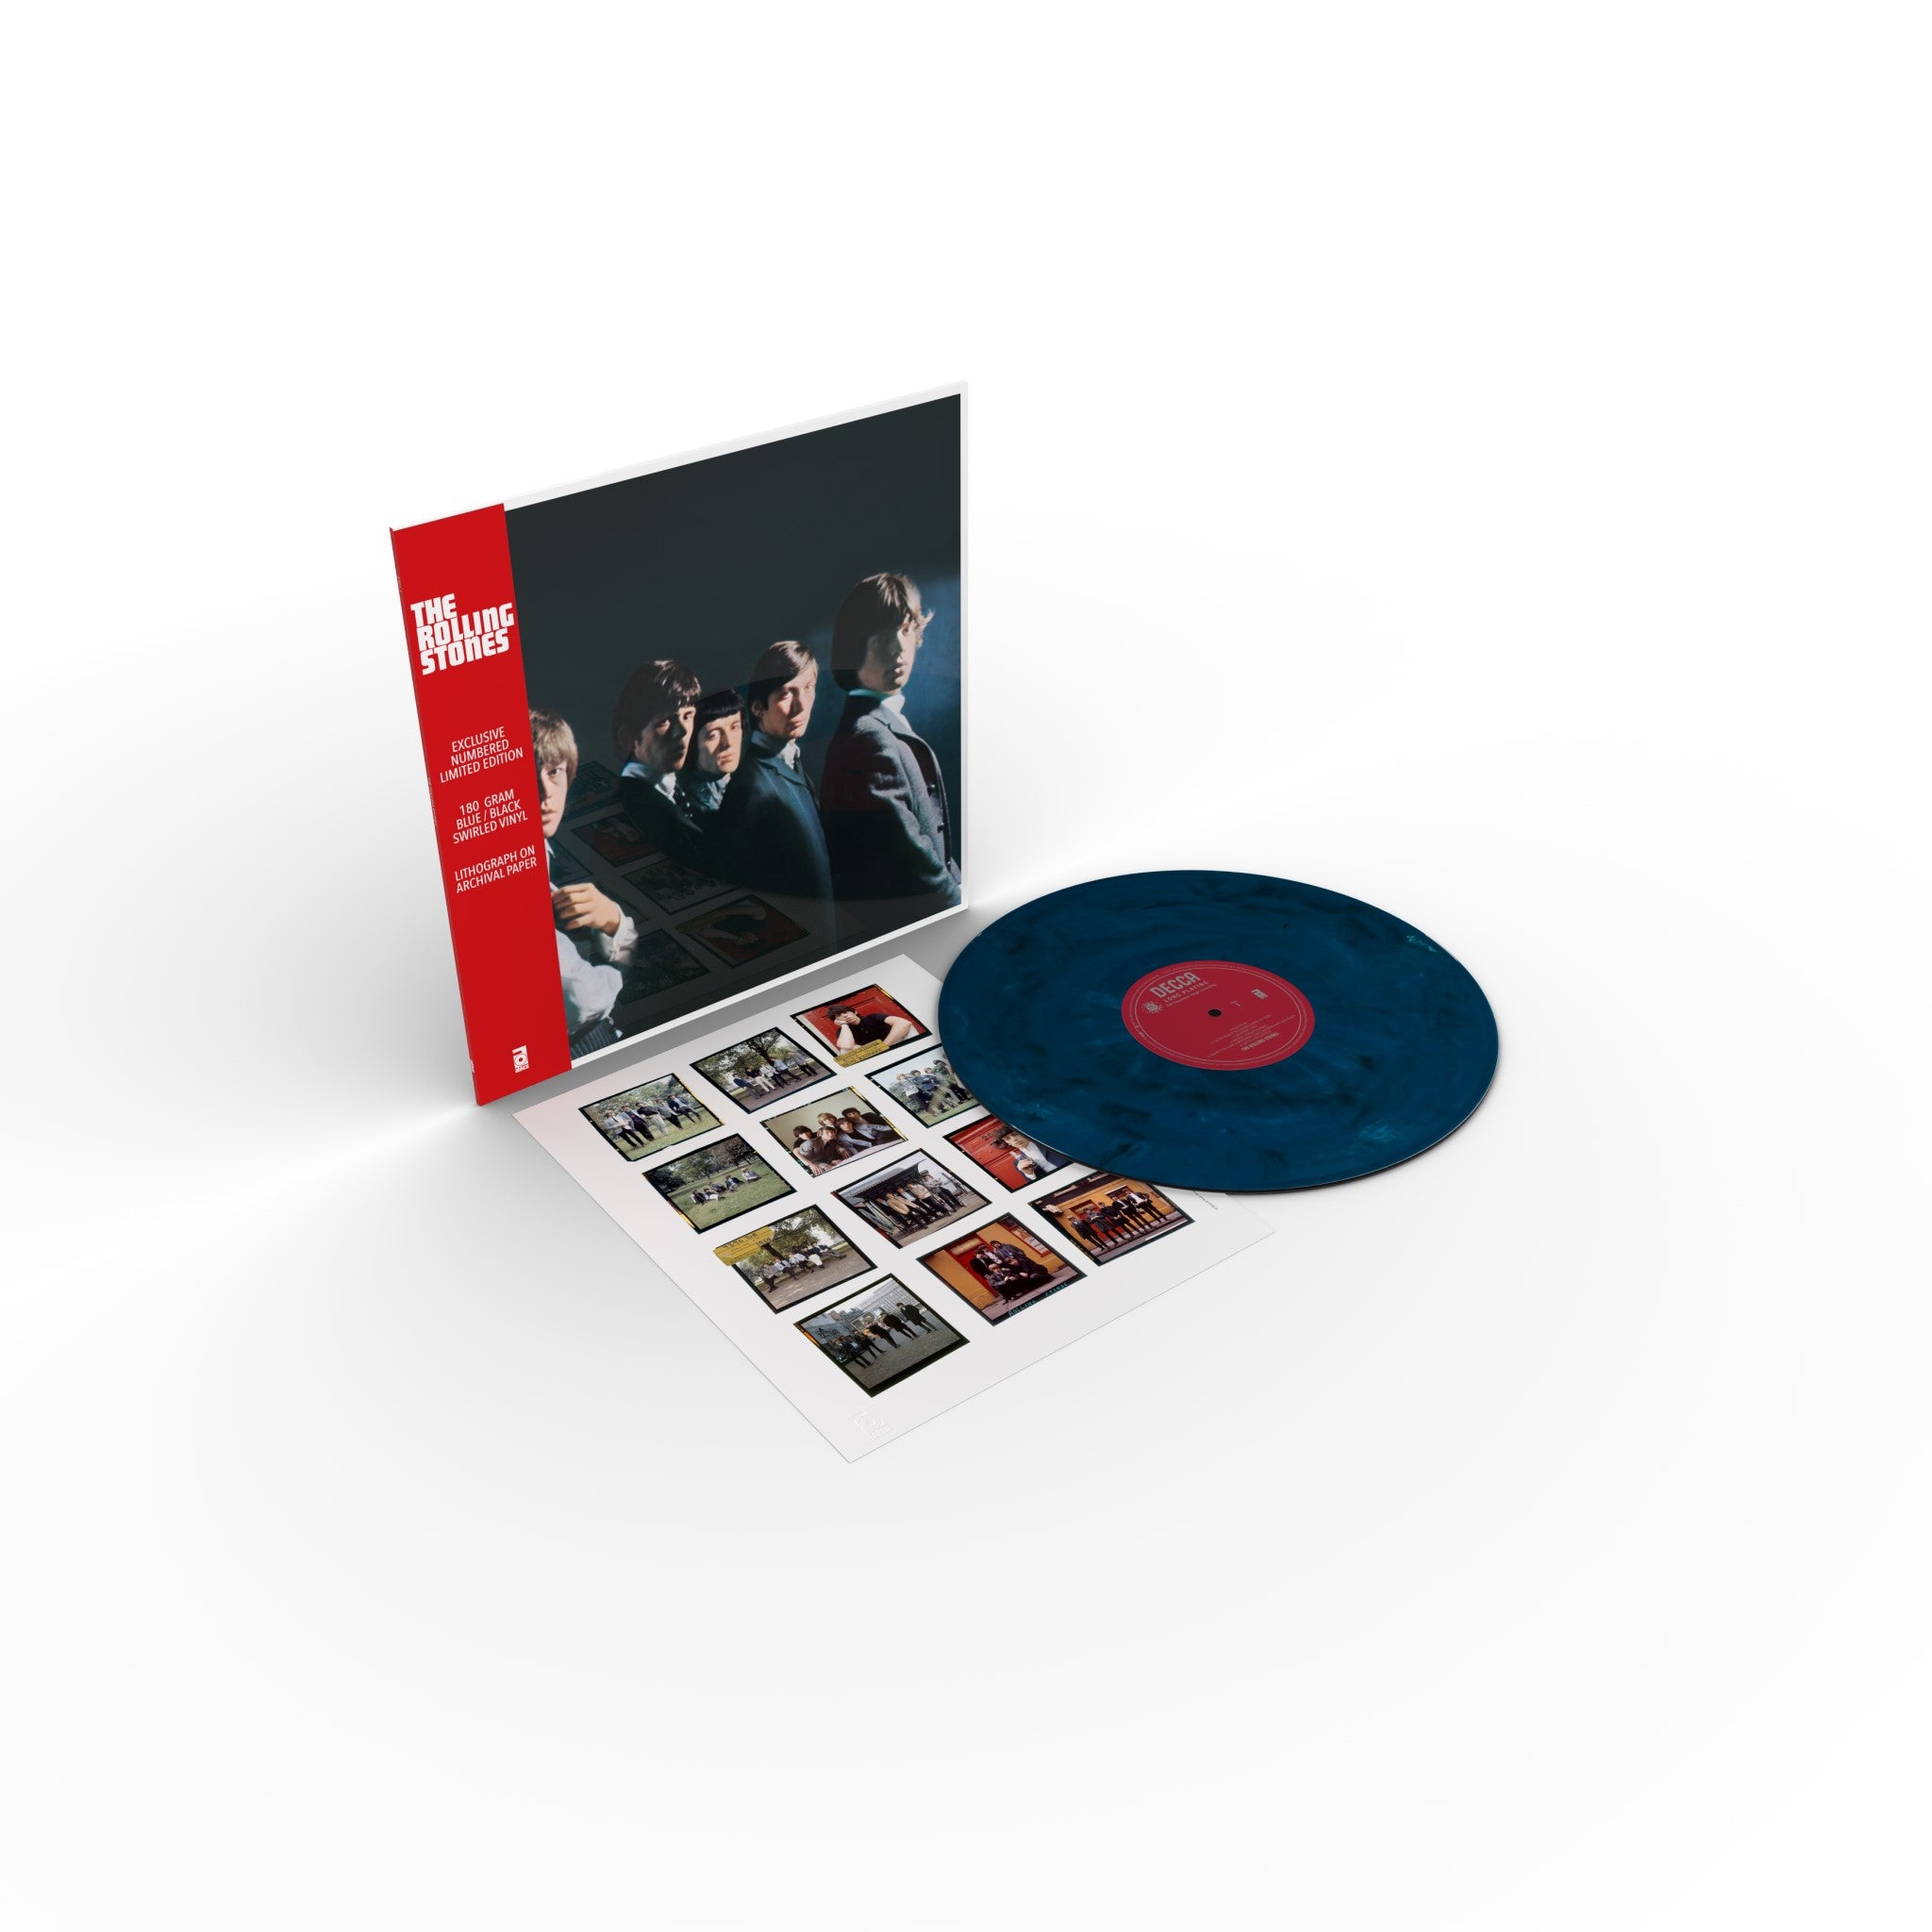 THE ROLLING STONES - Rolling Stones - 1 LP - 180g Blue and Black Swirl Vinyl  [RSD 2024]